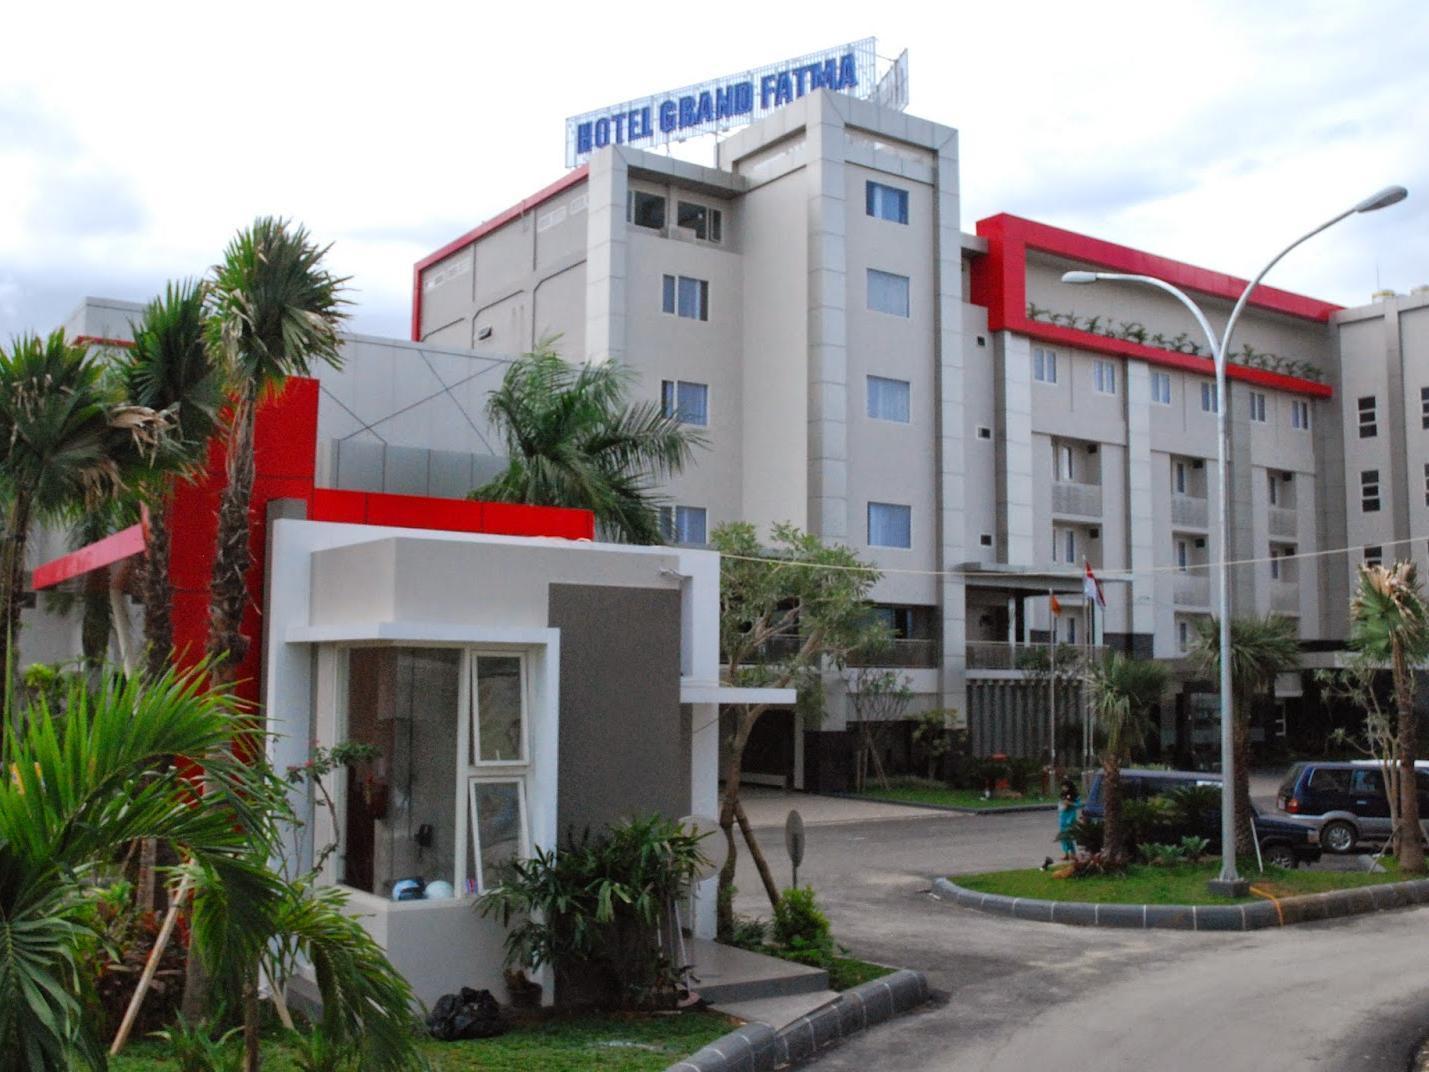 Grand Fatma Hotel - Tenggarong